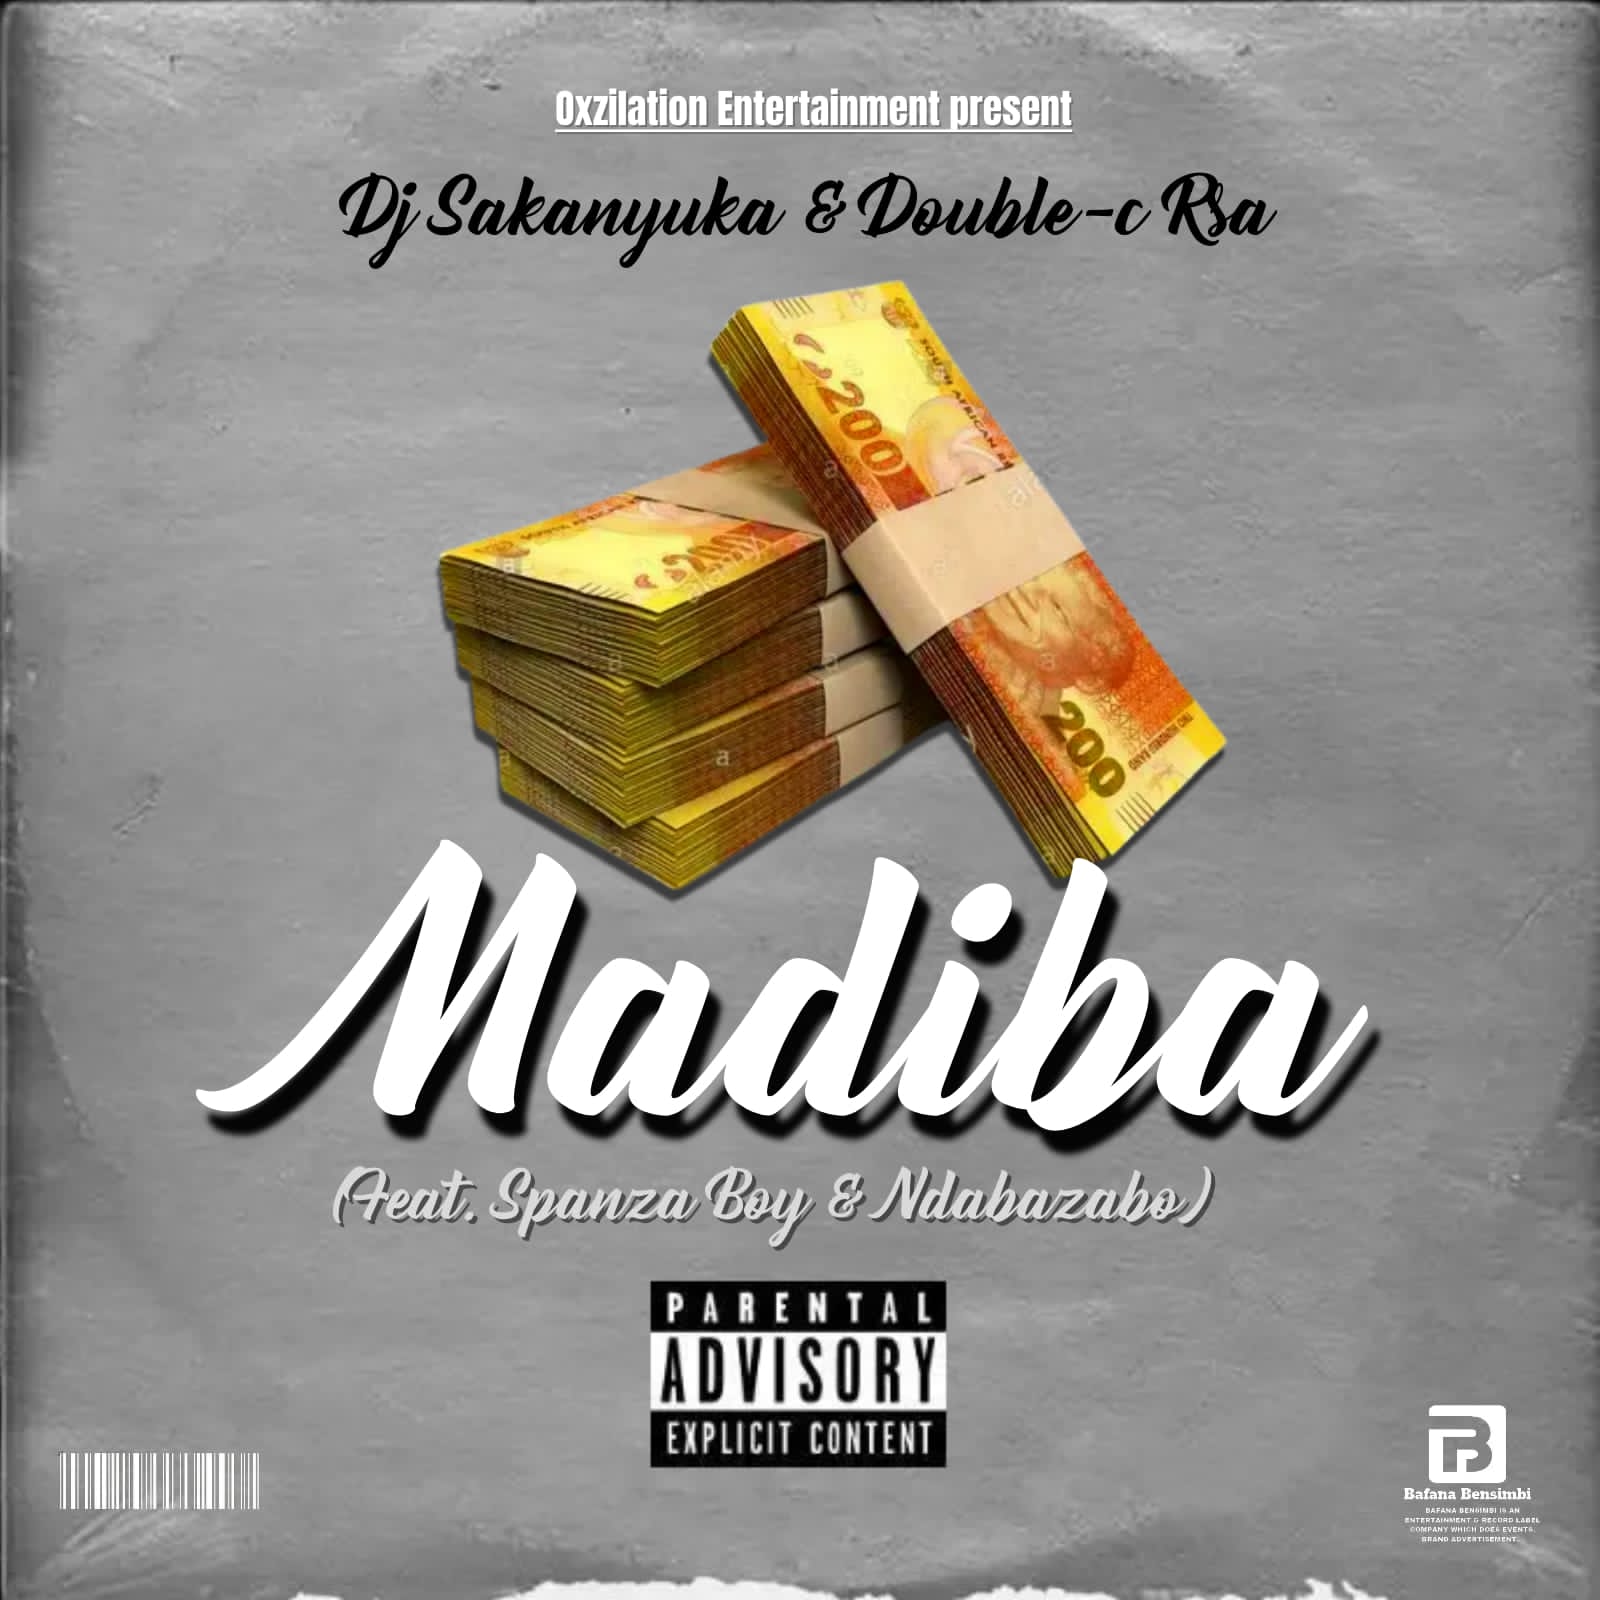 Madiba (ft. Flame & Spanza boy) - Double-c Rsa & Dj Sakanyuka